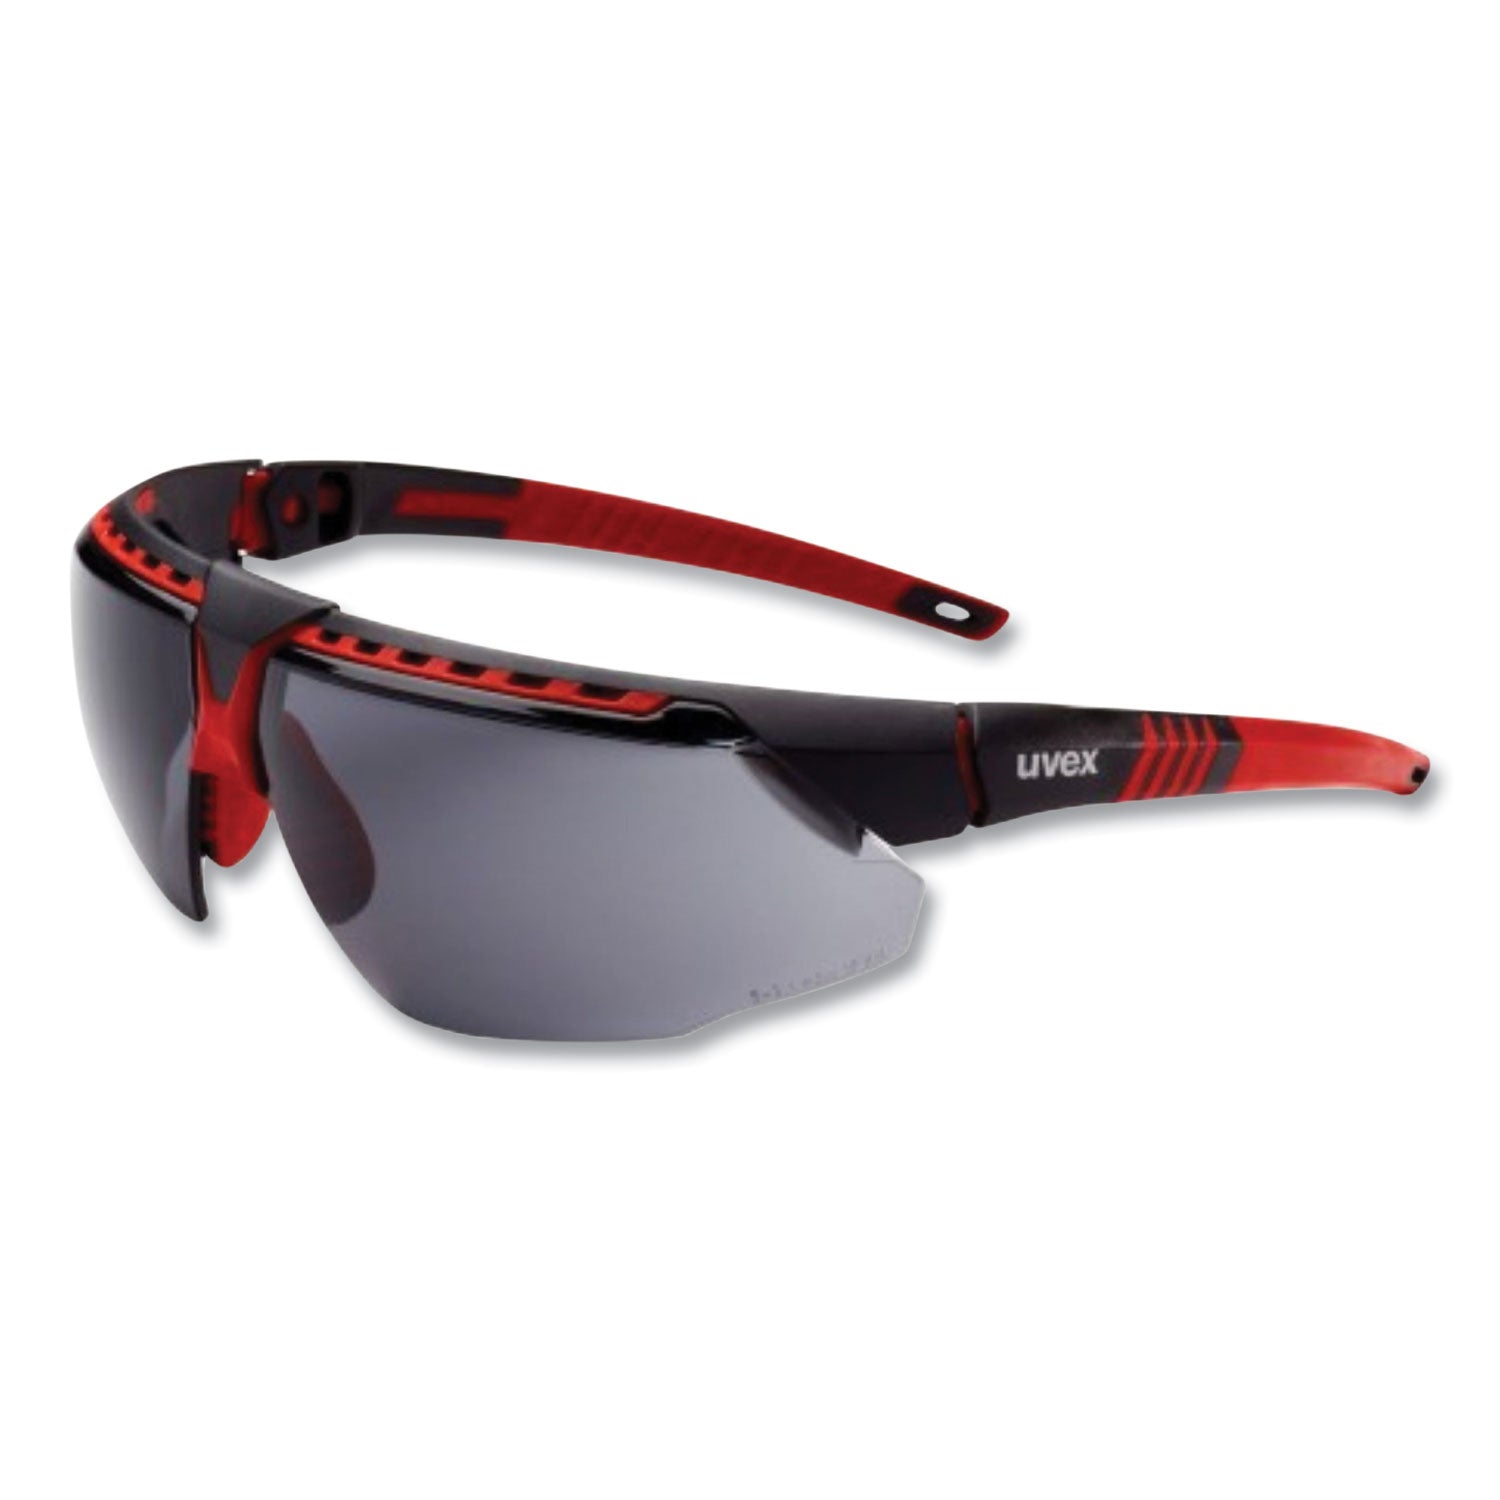 avatar-safety-glasses-black-red-polycarbonate-frame-gray-polycarbonate-lens_uvxs2861hs - 1